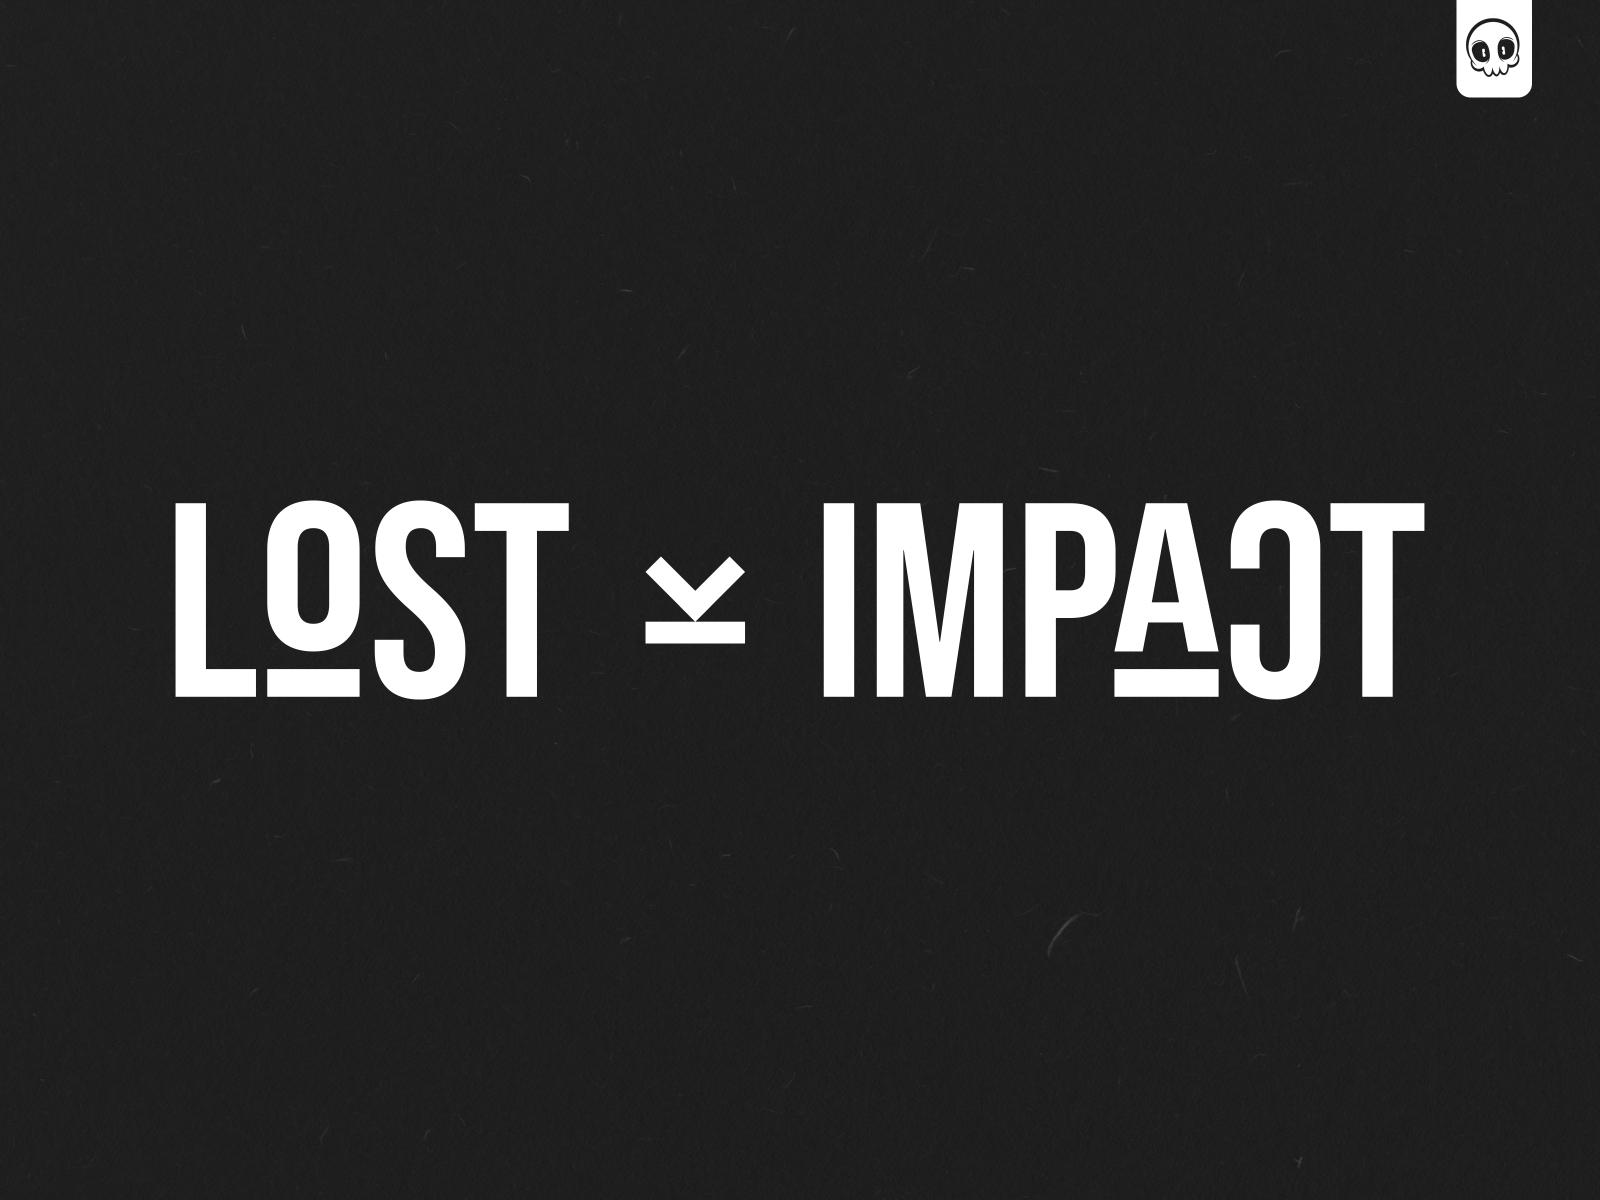 Lost Impact - Logo by Meikel P. on Dribbble